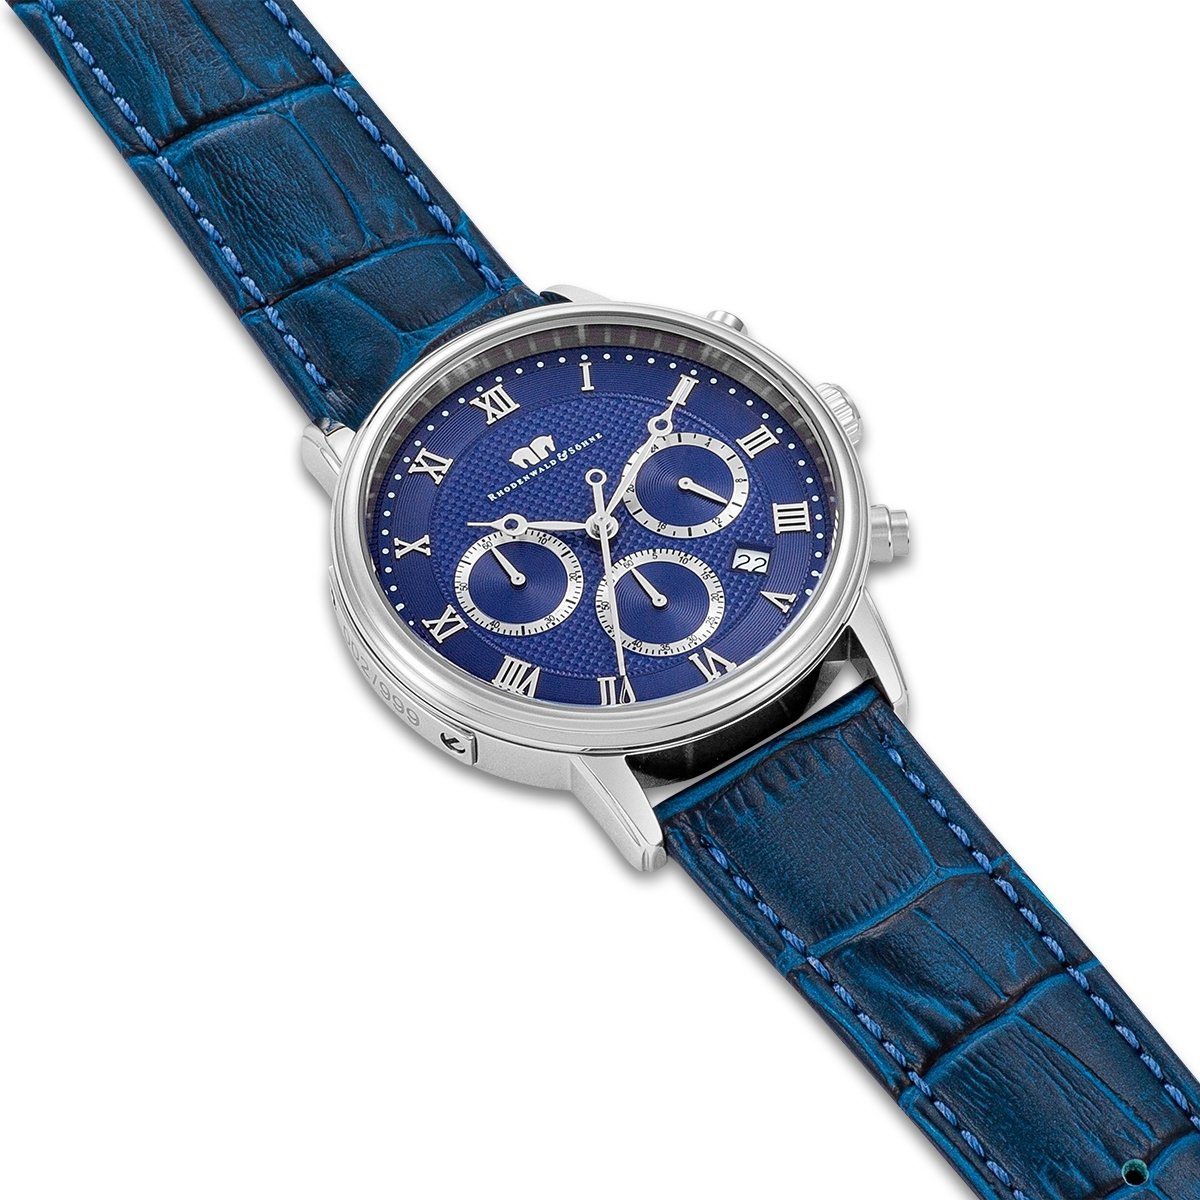 & blau, Söhne Rhodenwald Chronograph Echtleder-Armband mit Moonlight